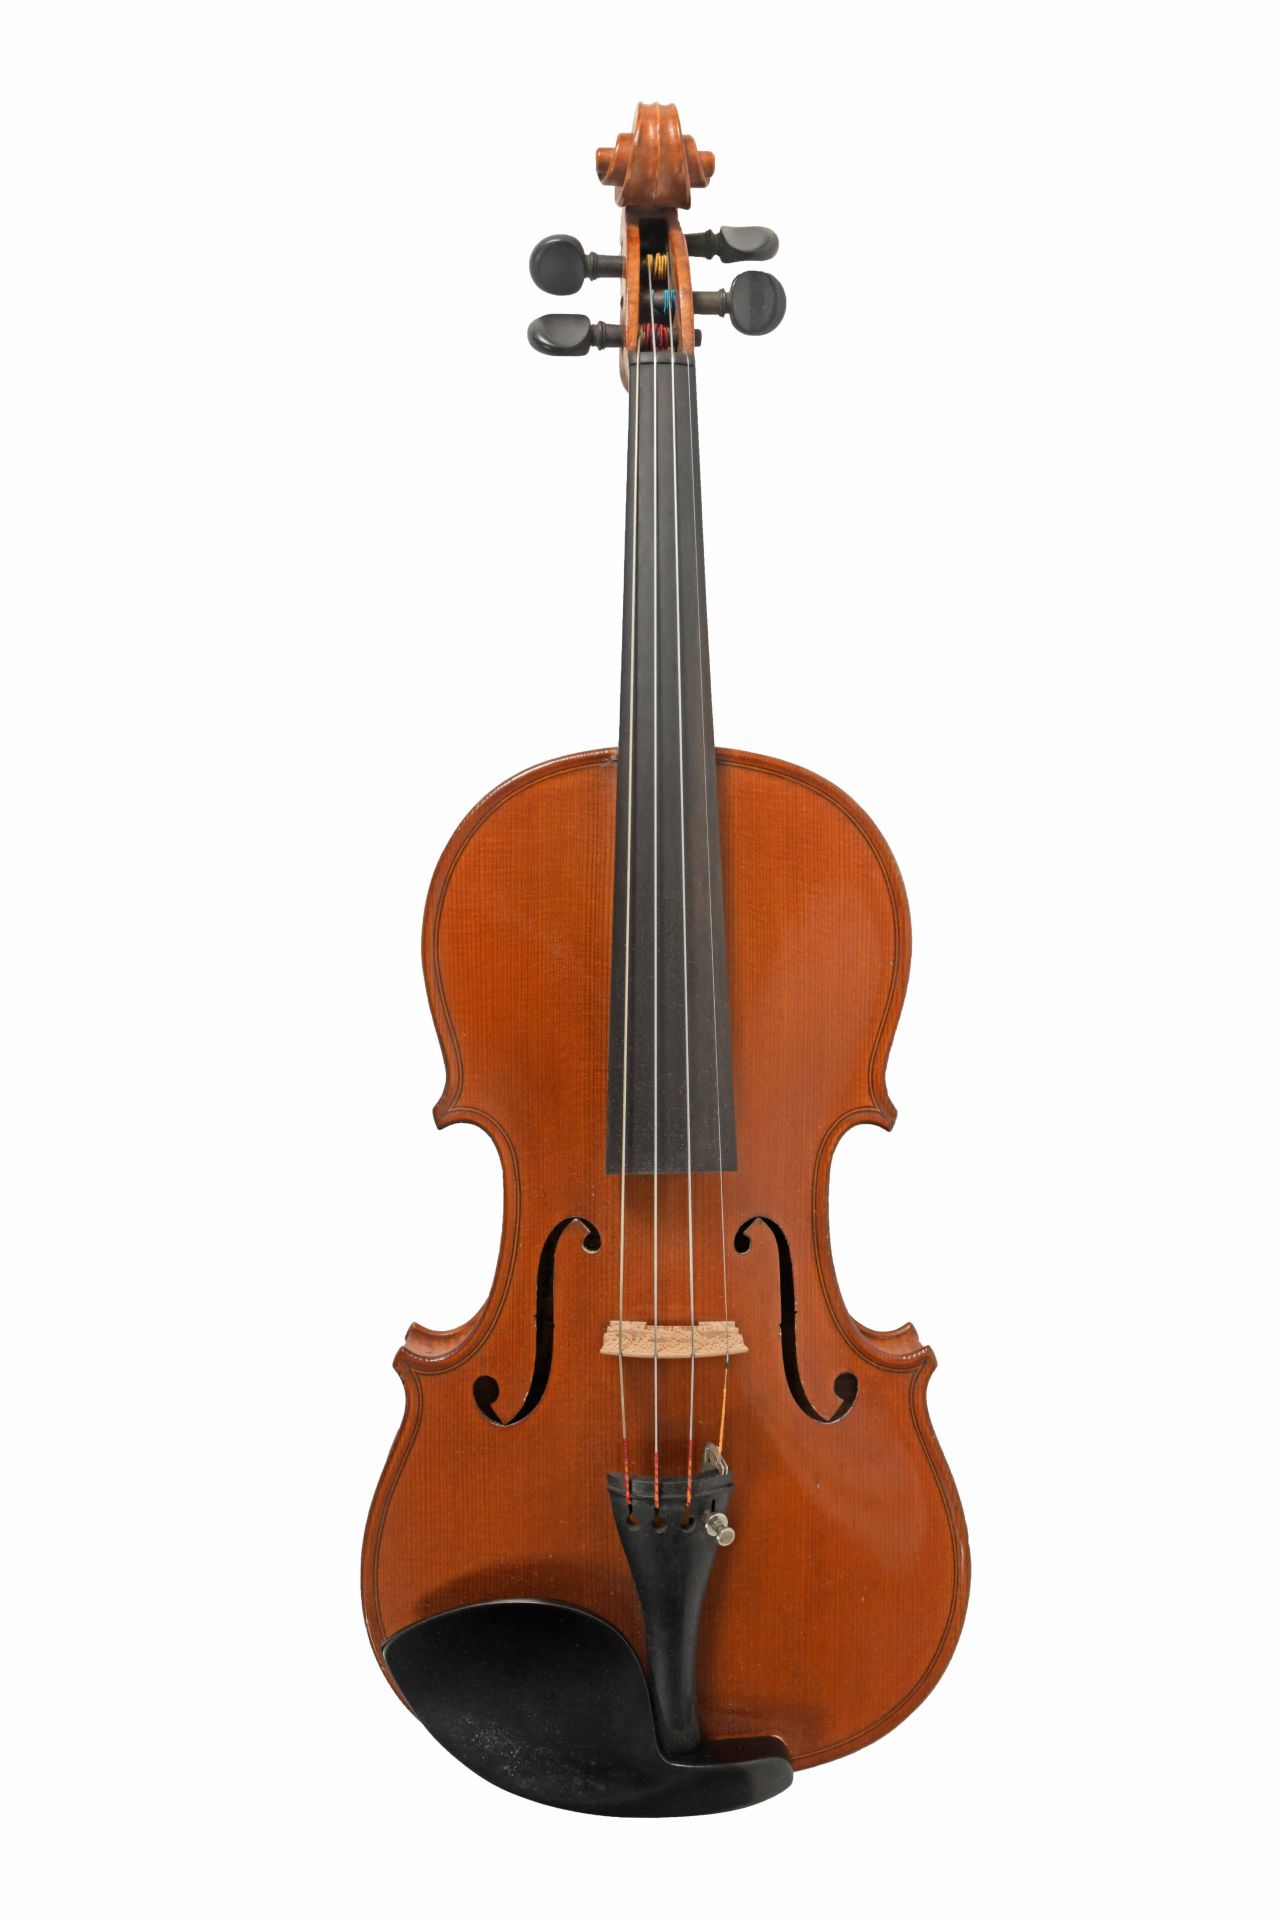 Edwin Whitmarsh violin (1 of 2)